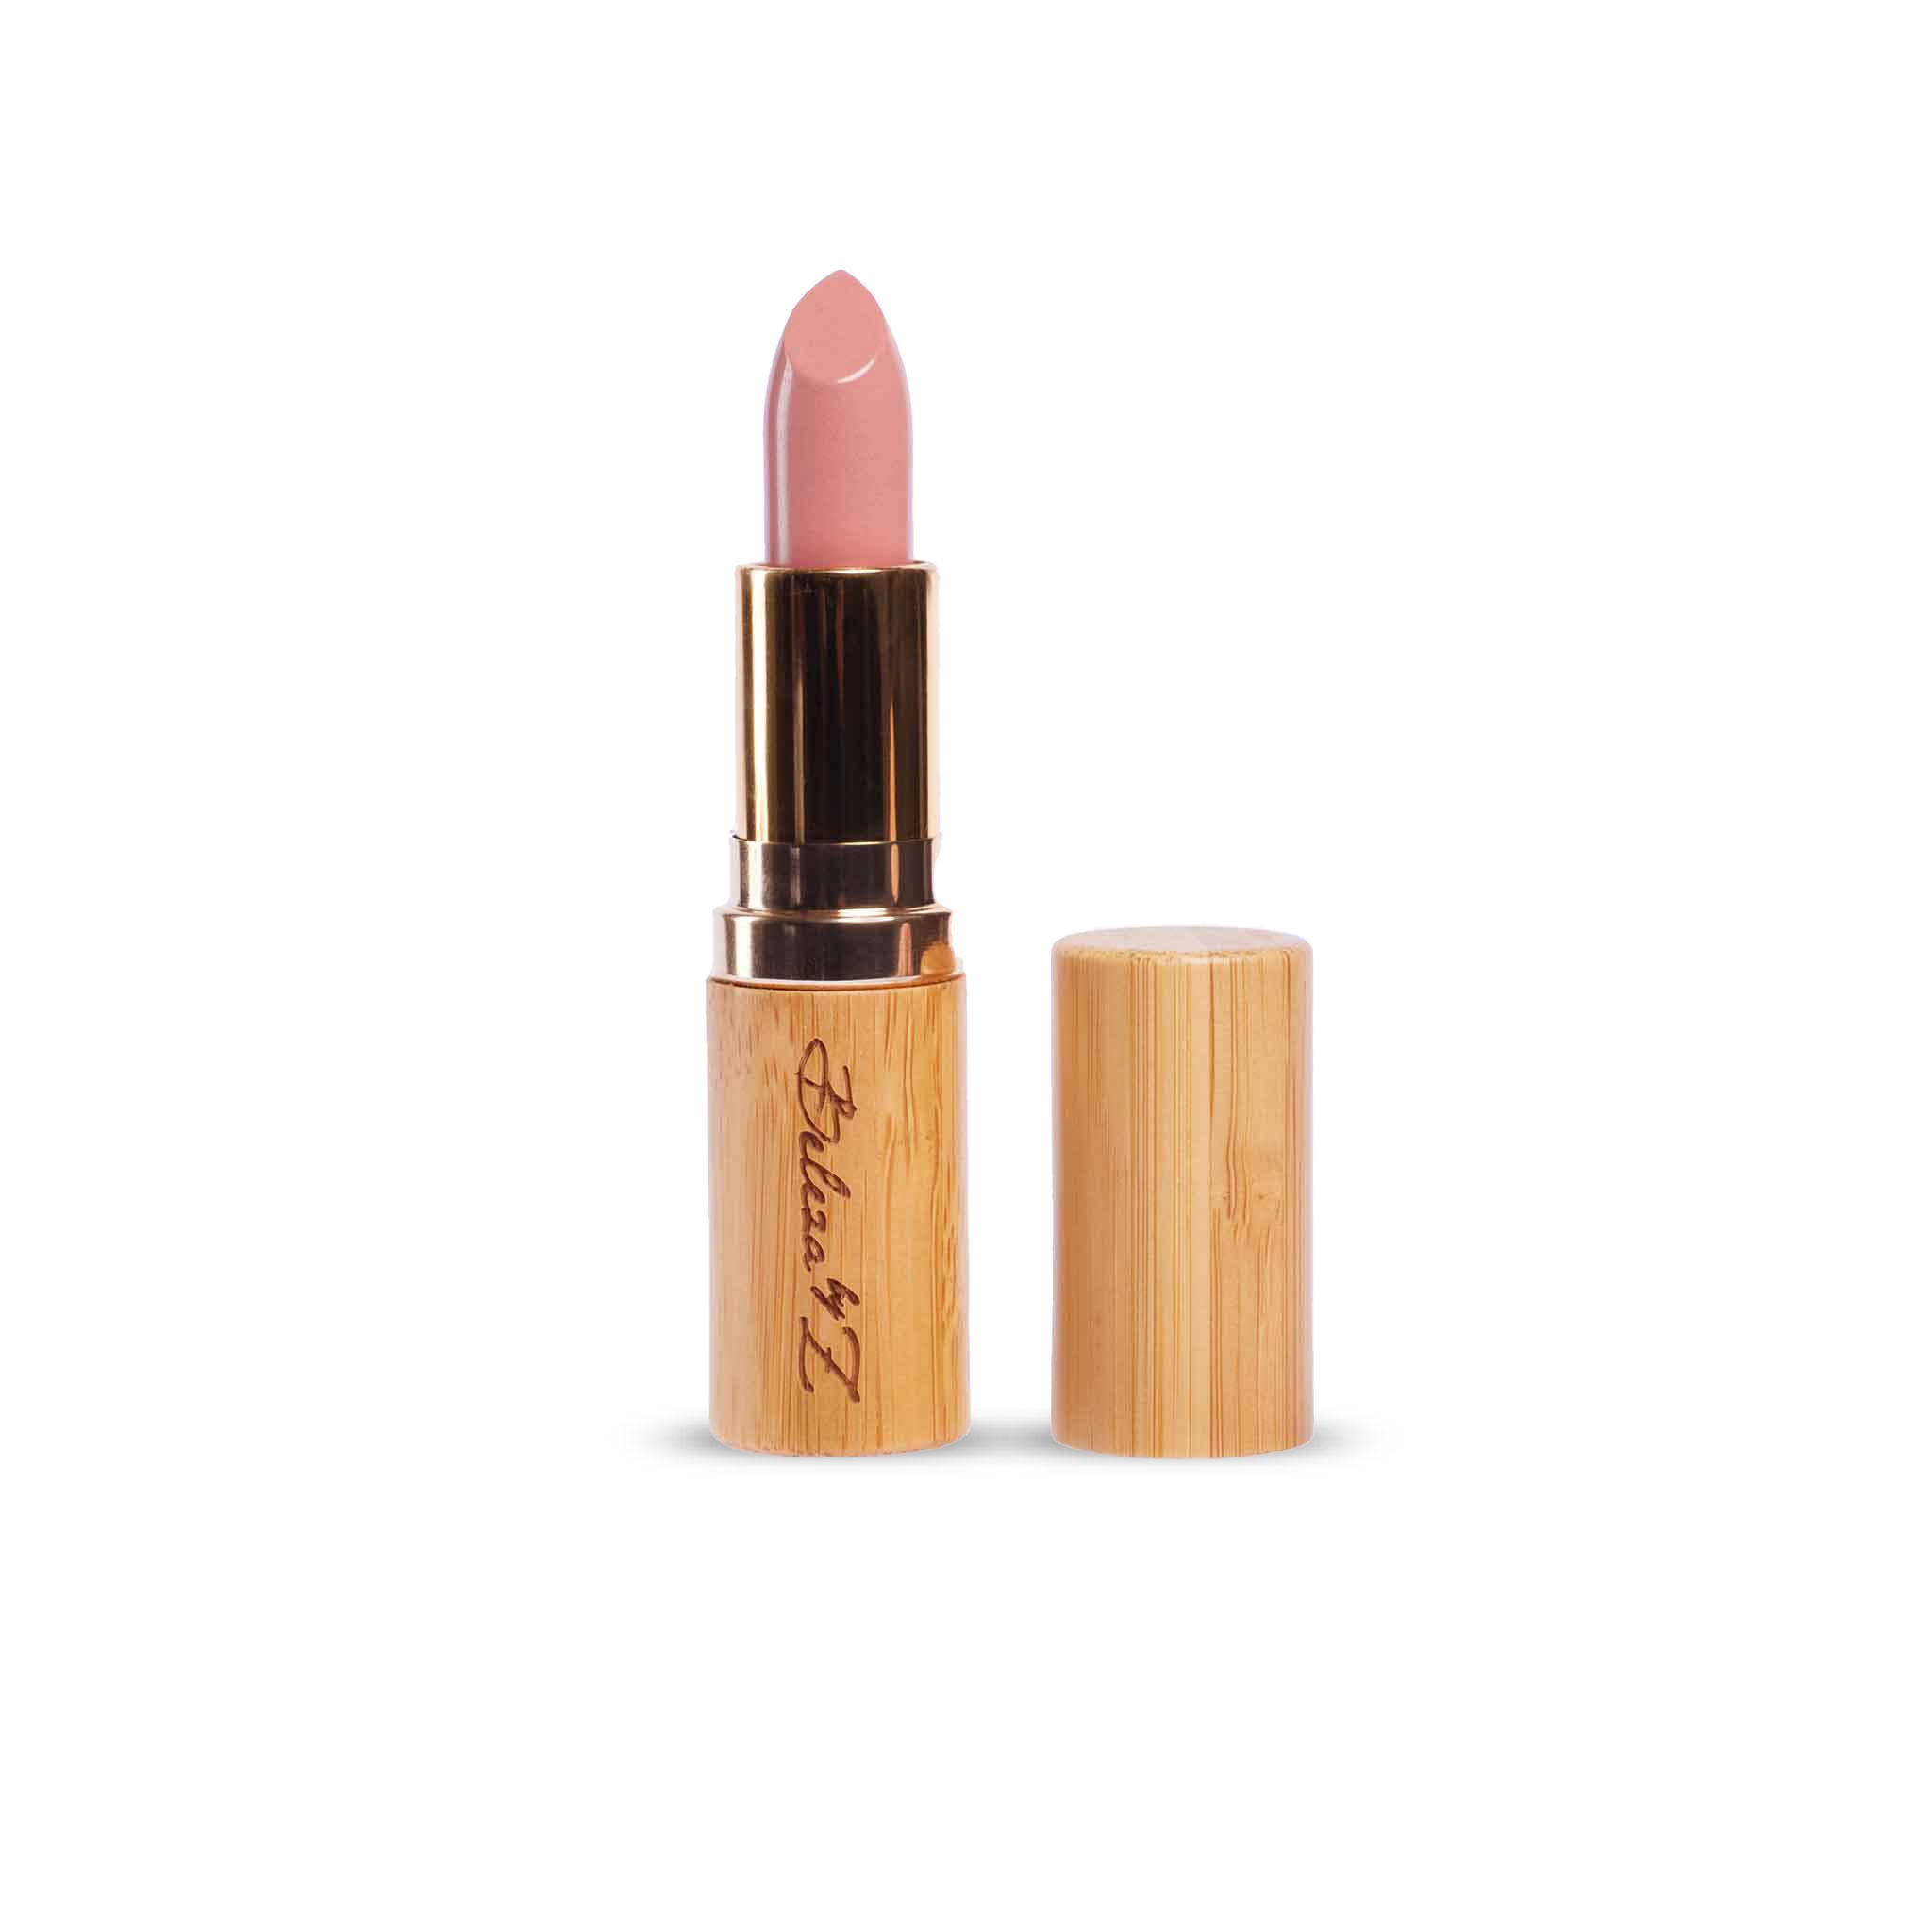 Ultra-creamy moisturizing lipstick in color Healthy